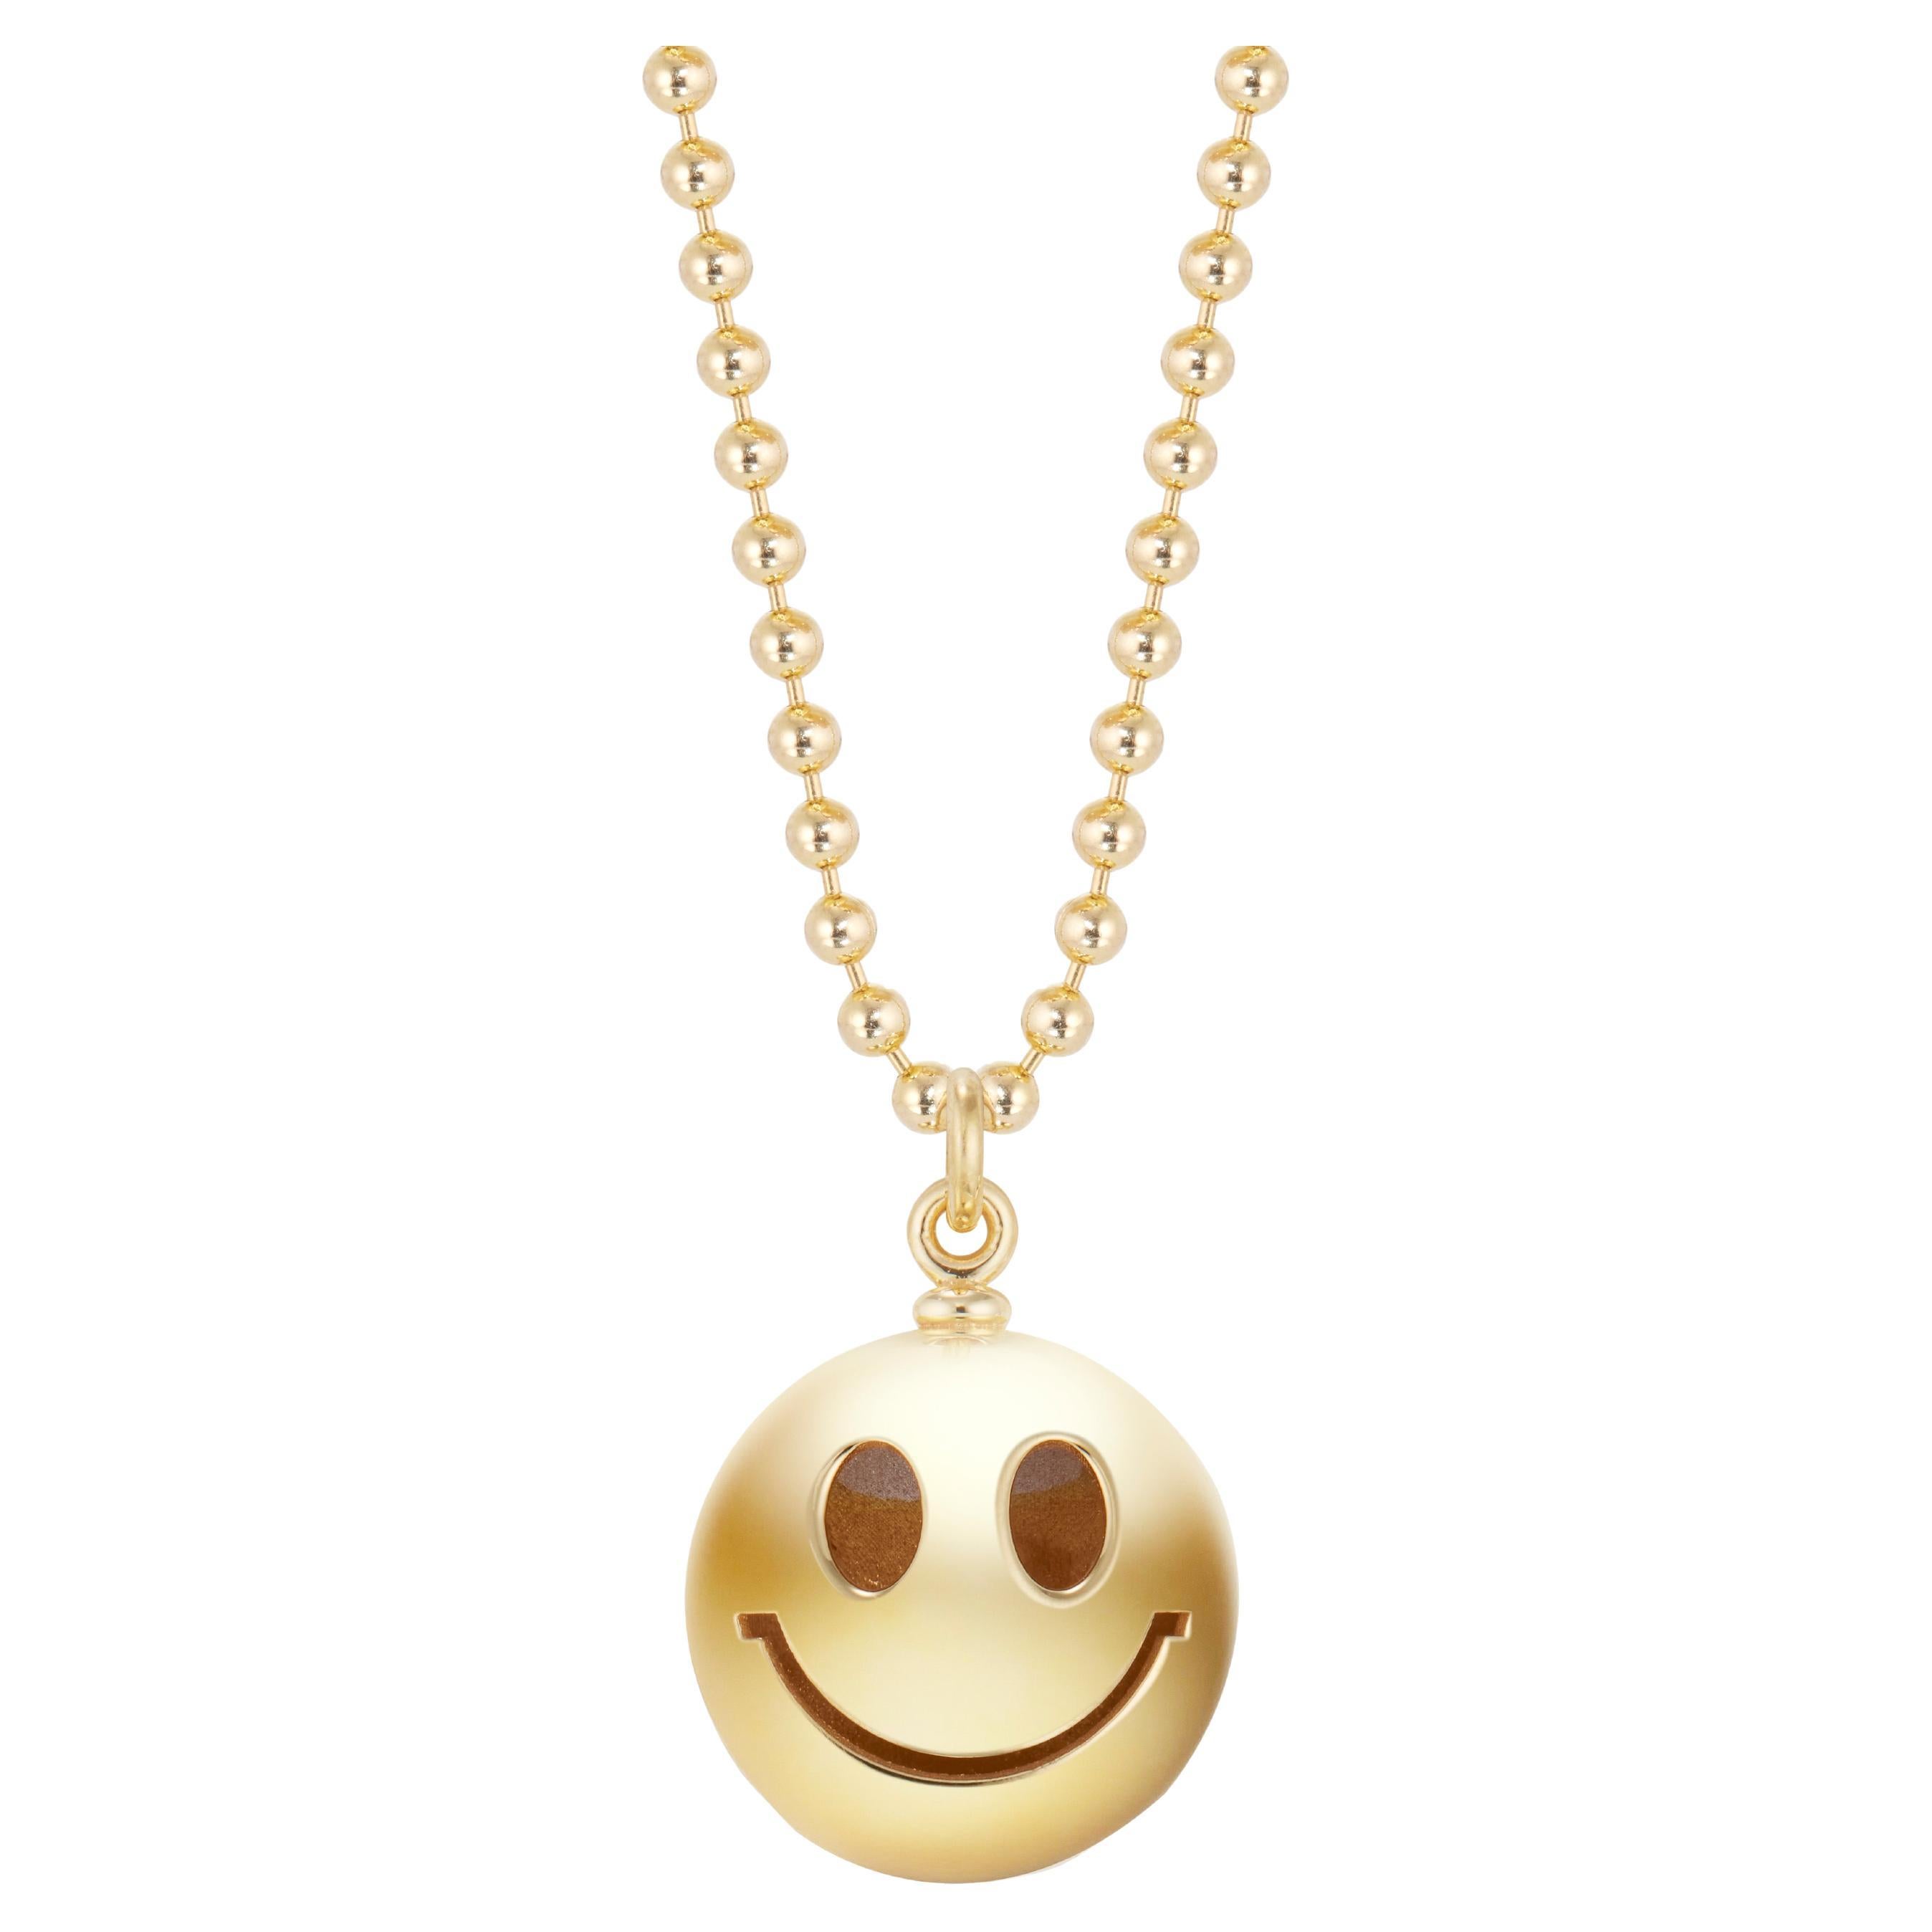 Zoma Design 14 Carat Yellow Gold Smiley Face Pendant Necklace